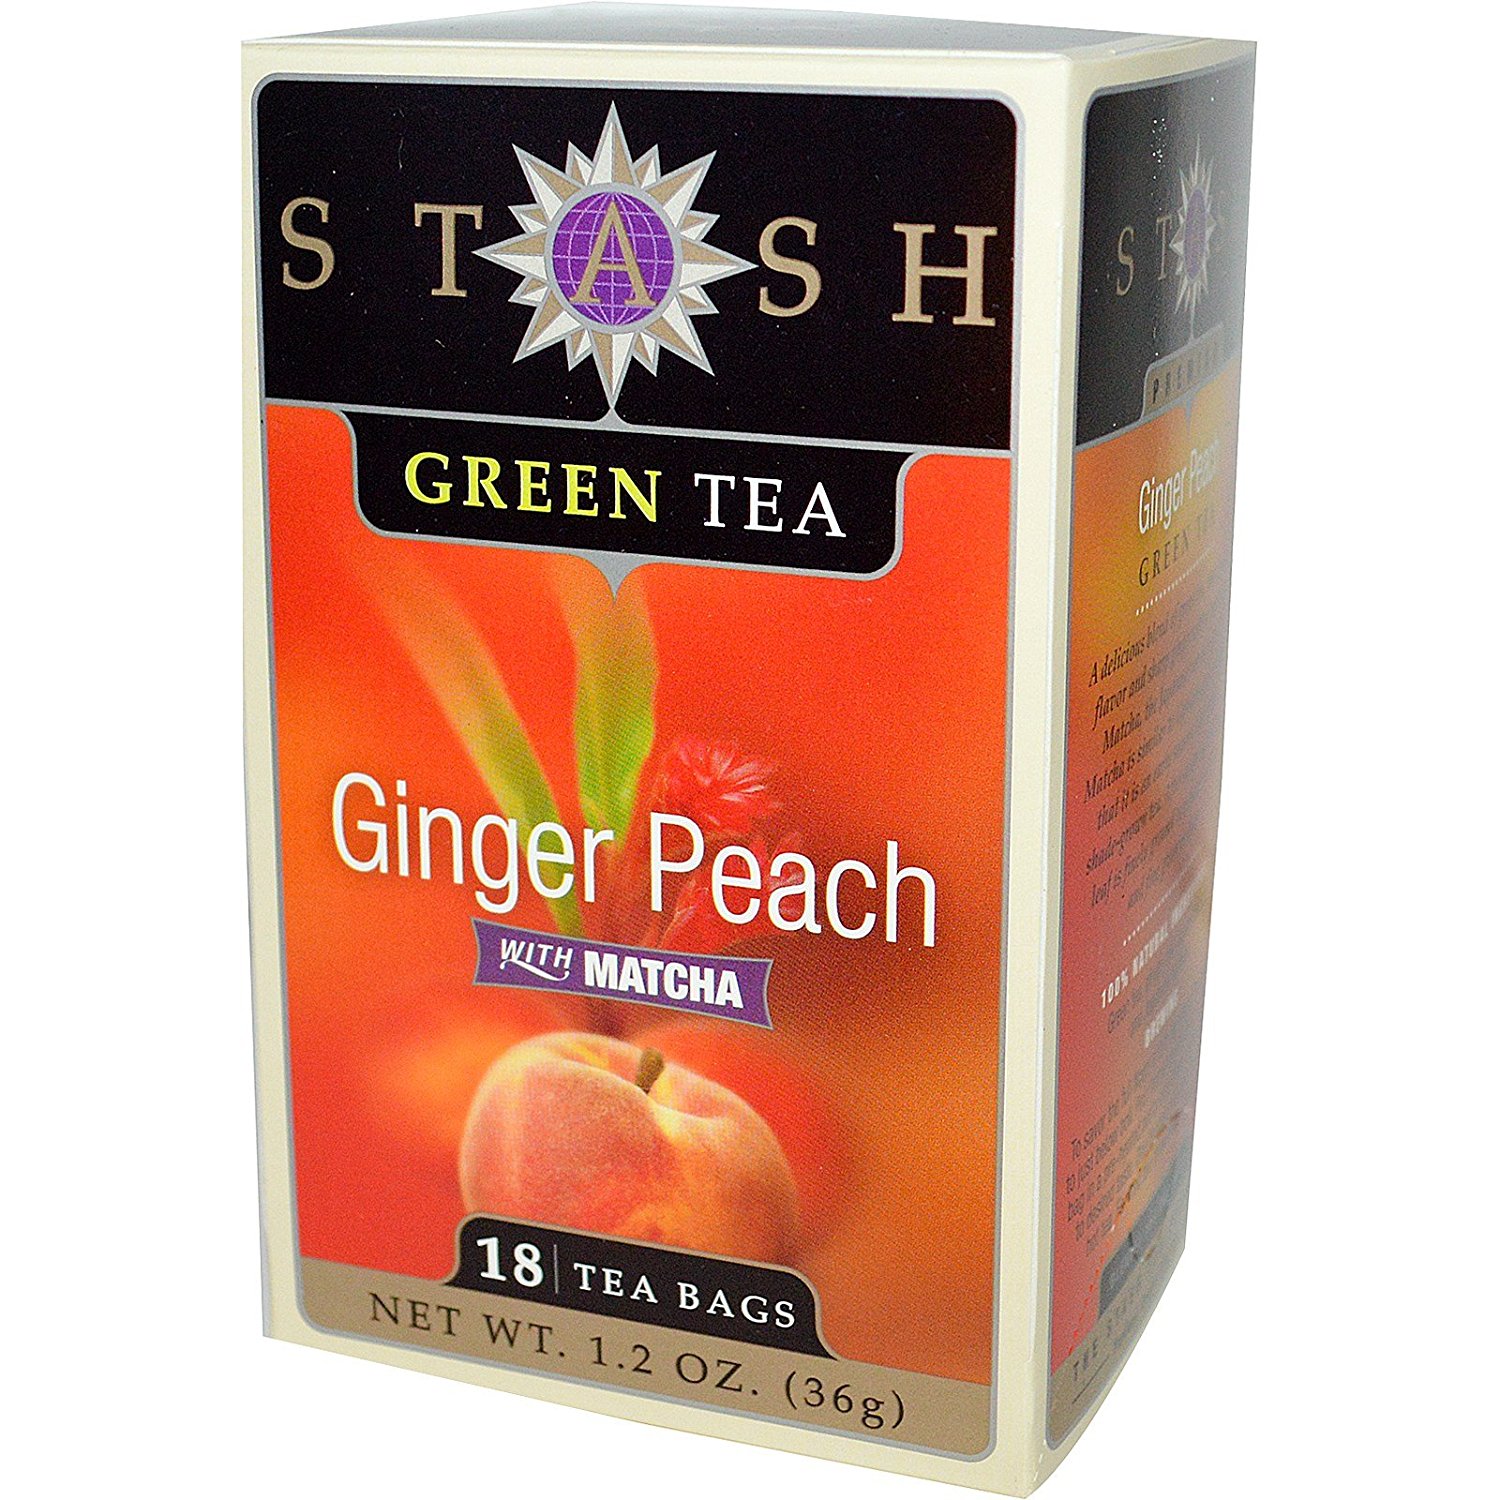 Ginger Peach Green Tea with Matcha